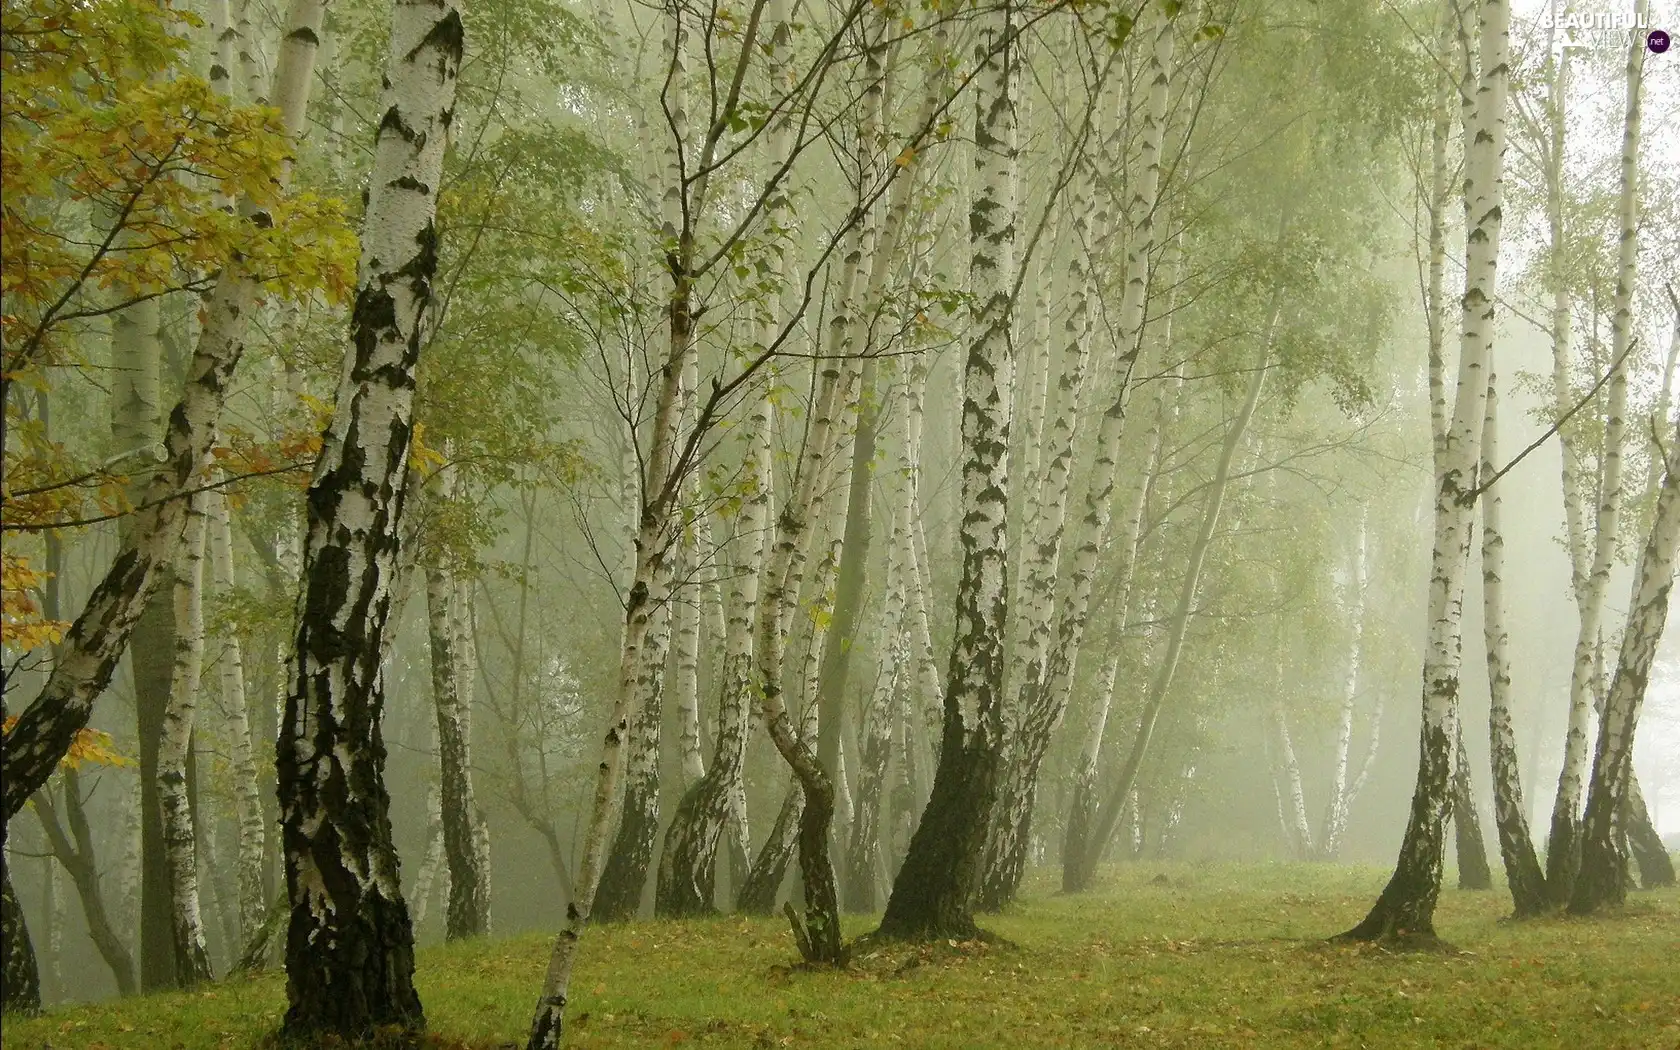 Leaf, autumn, birch, Fog, forest